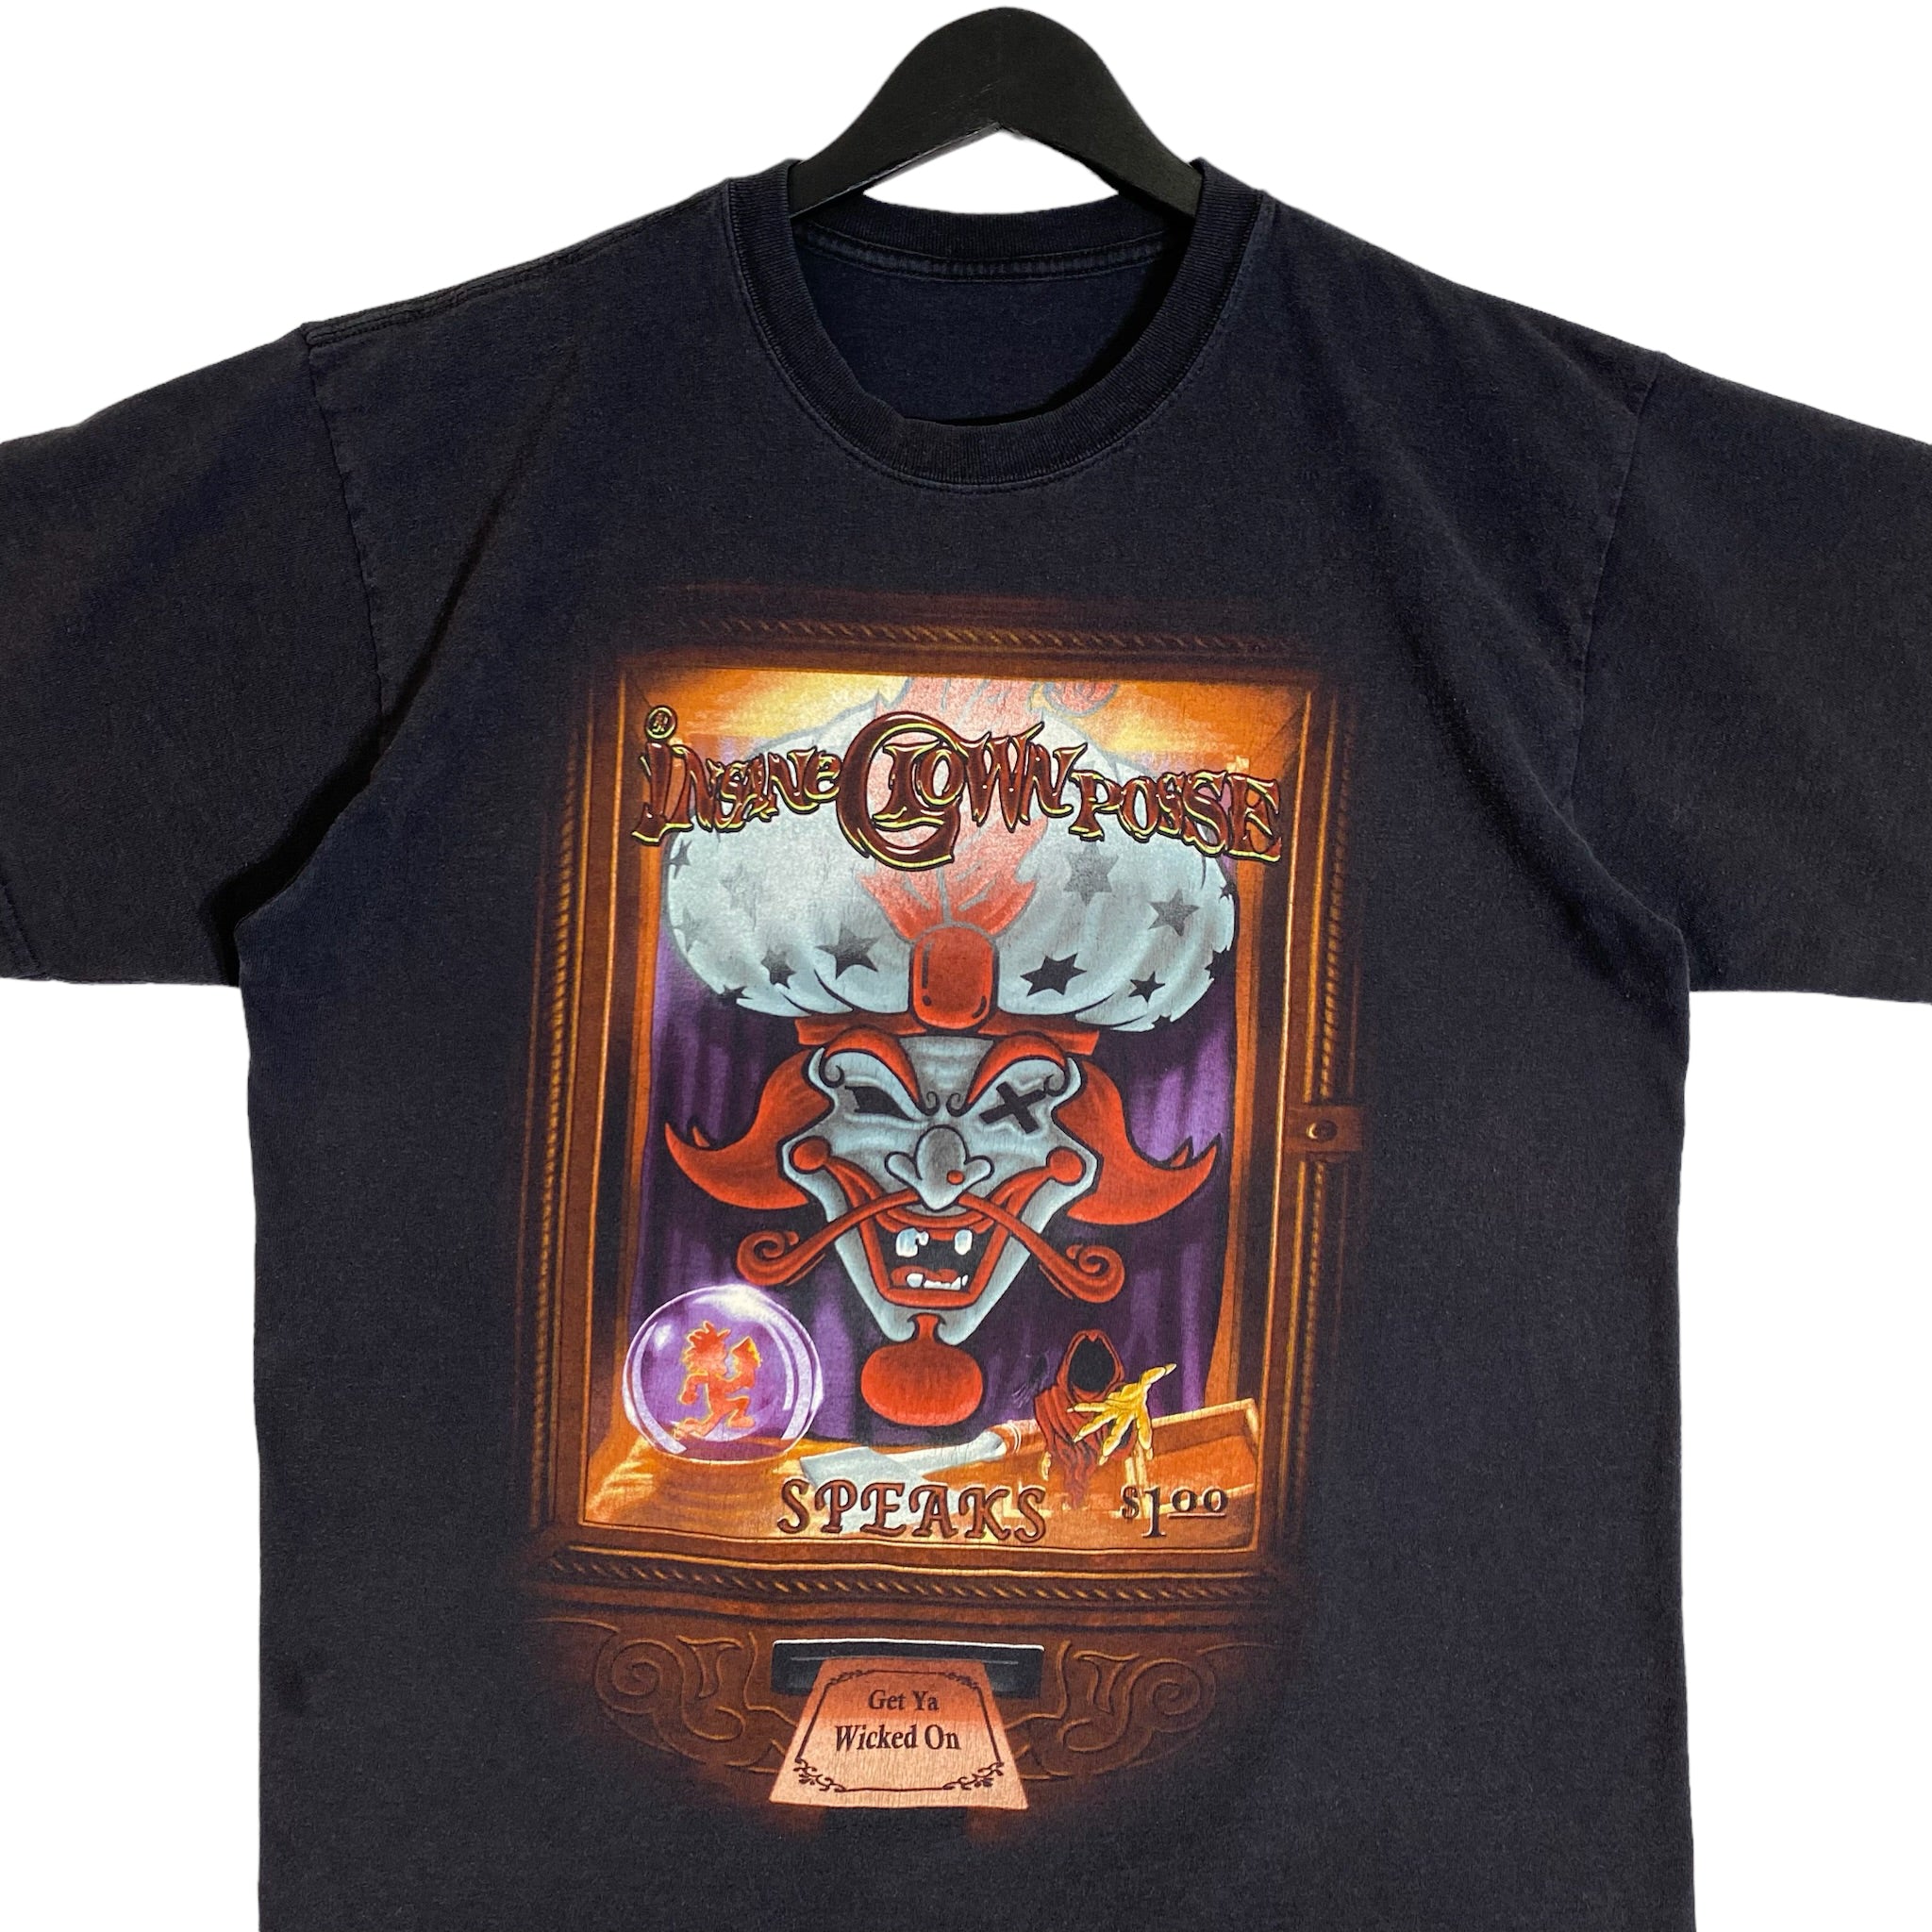 Insane Clown Posse Shirt 2000s